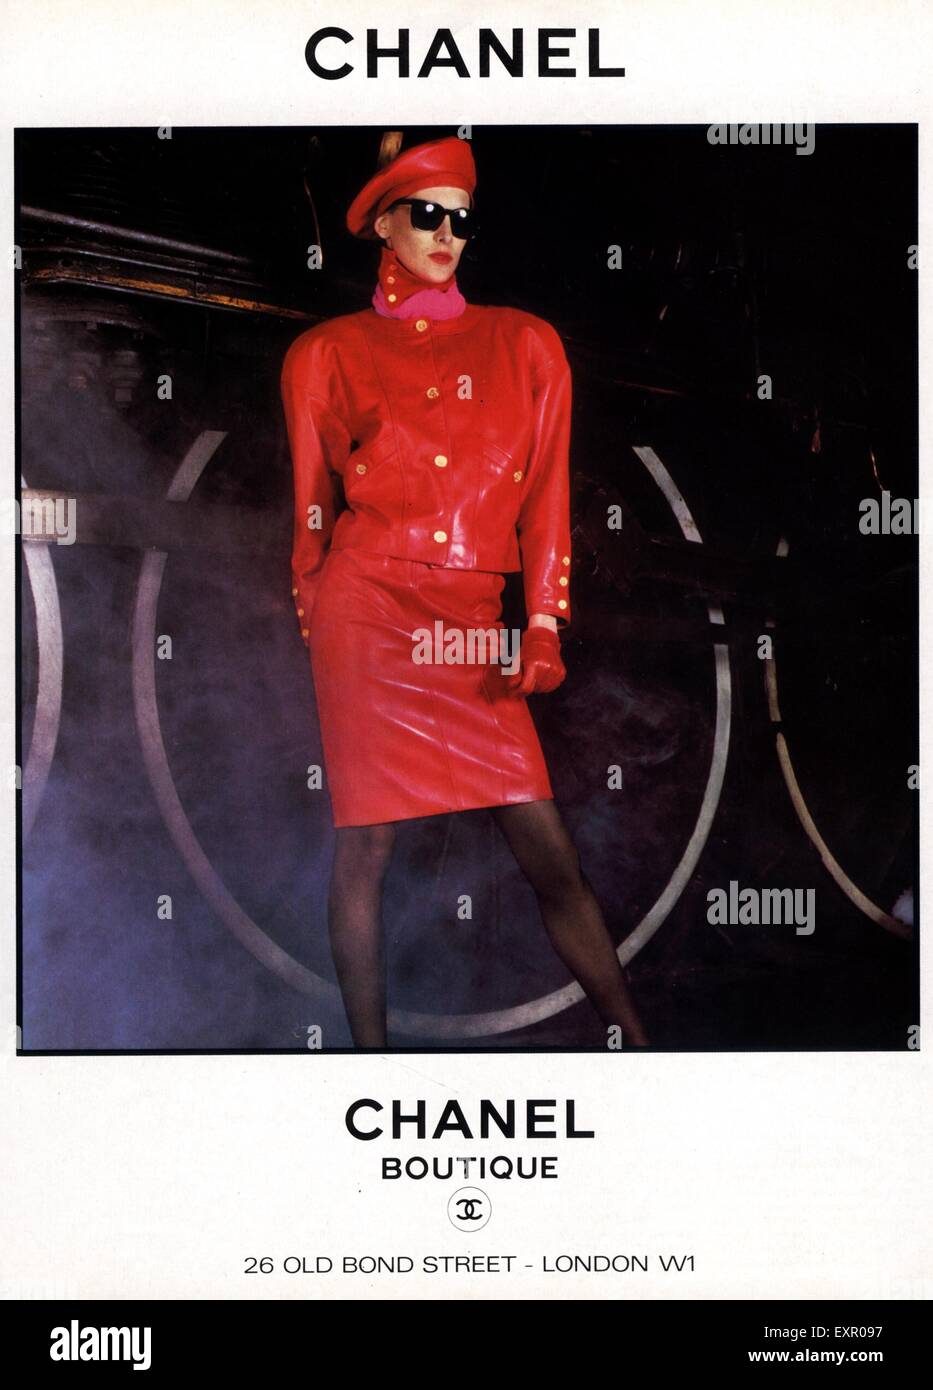 1970s UK Chanel Magazine Advert Stock Photo - Alamy